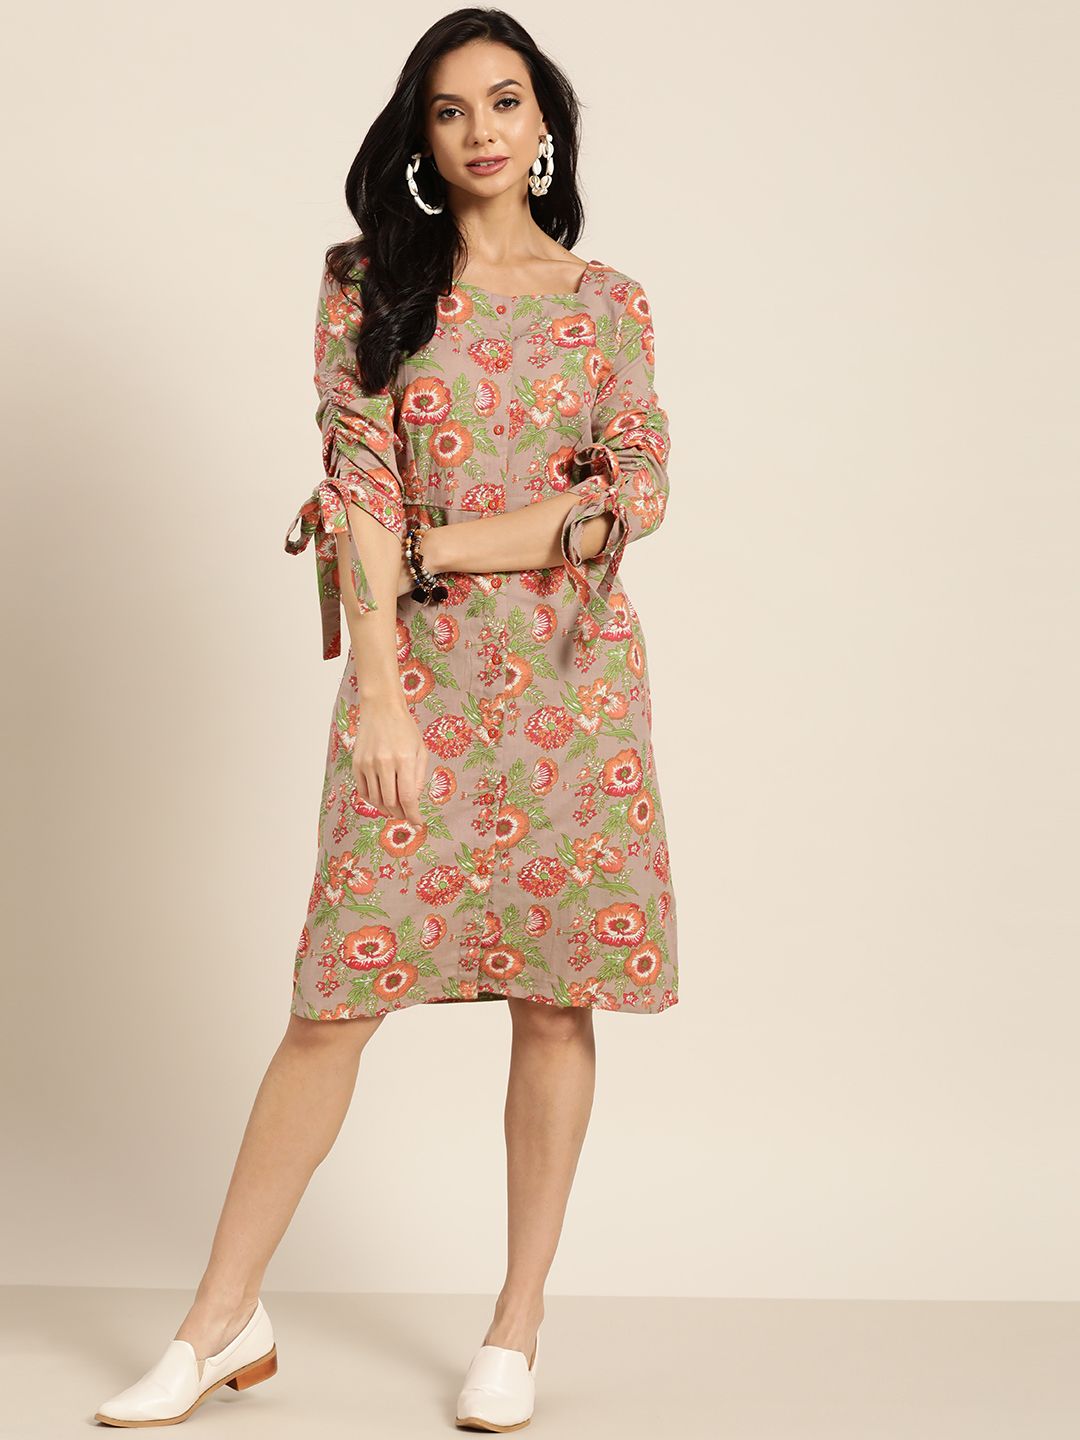 Sangria Beige & Orange Floral Print Pure Cotton A-Line Dress Price in India